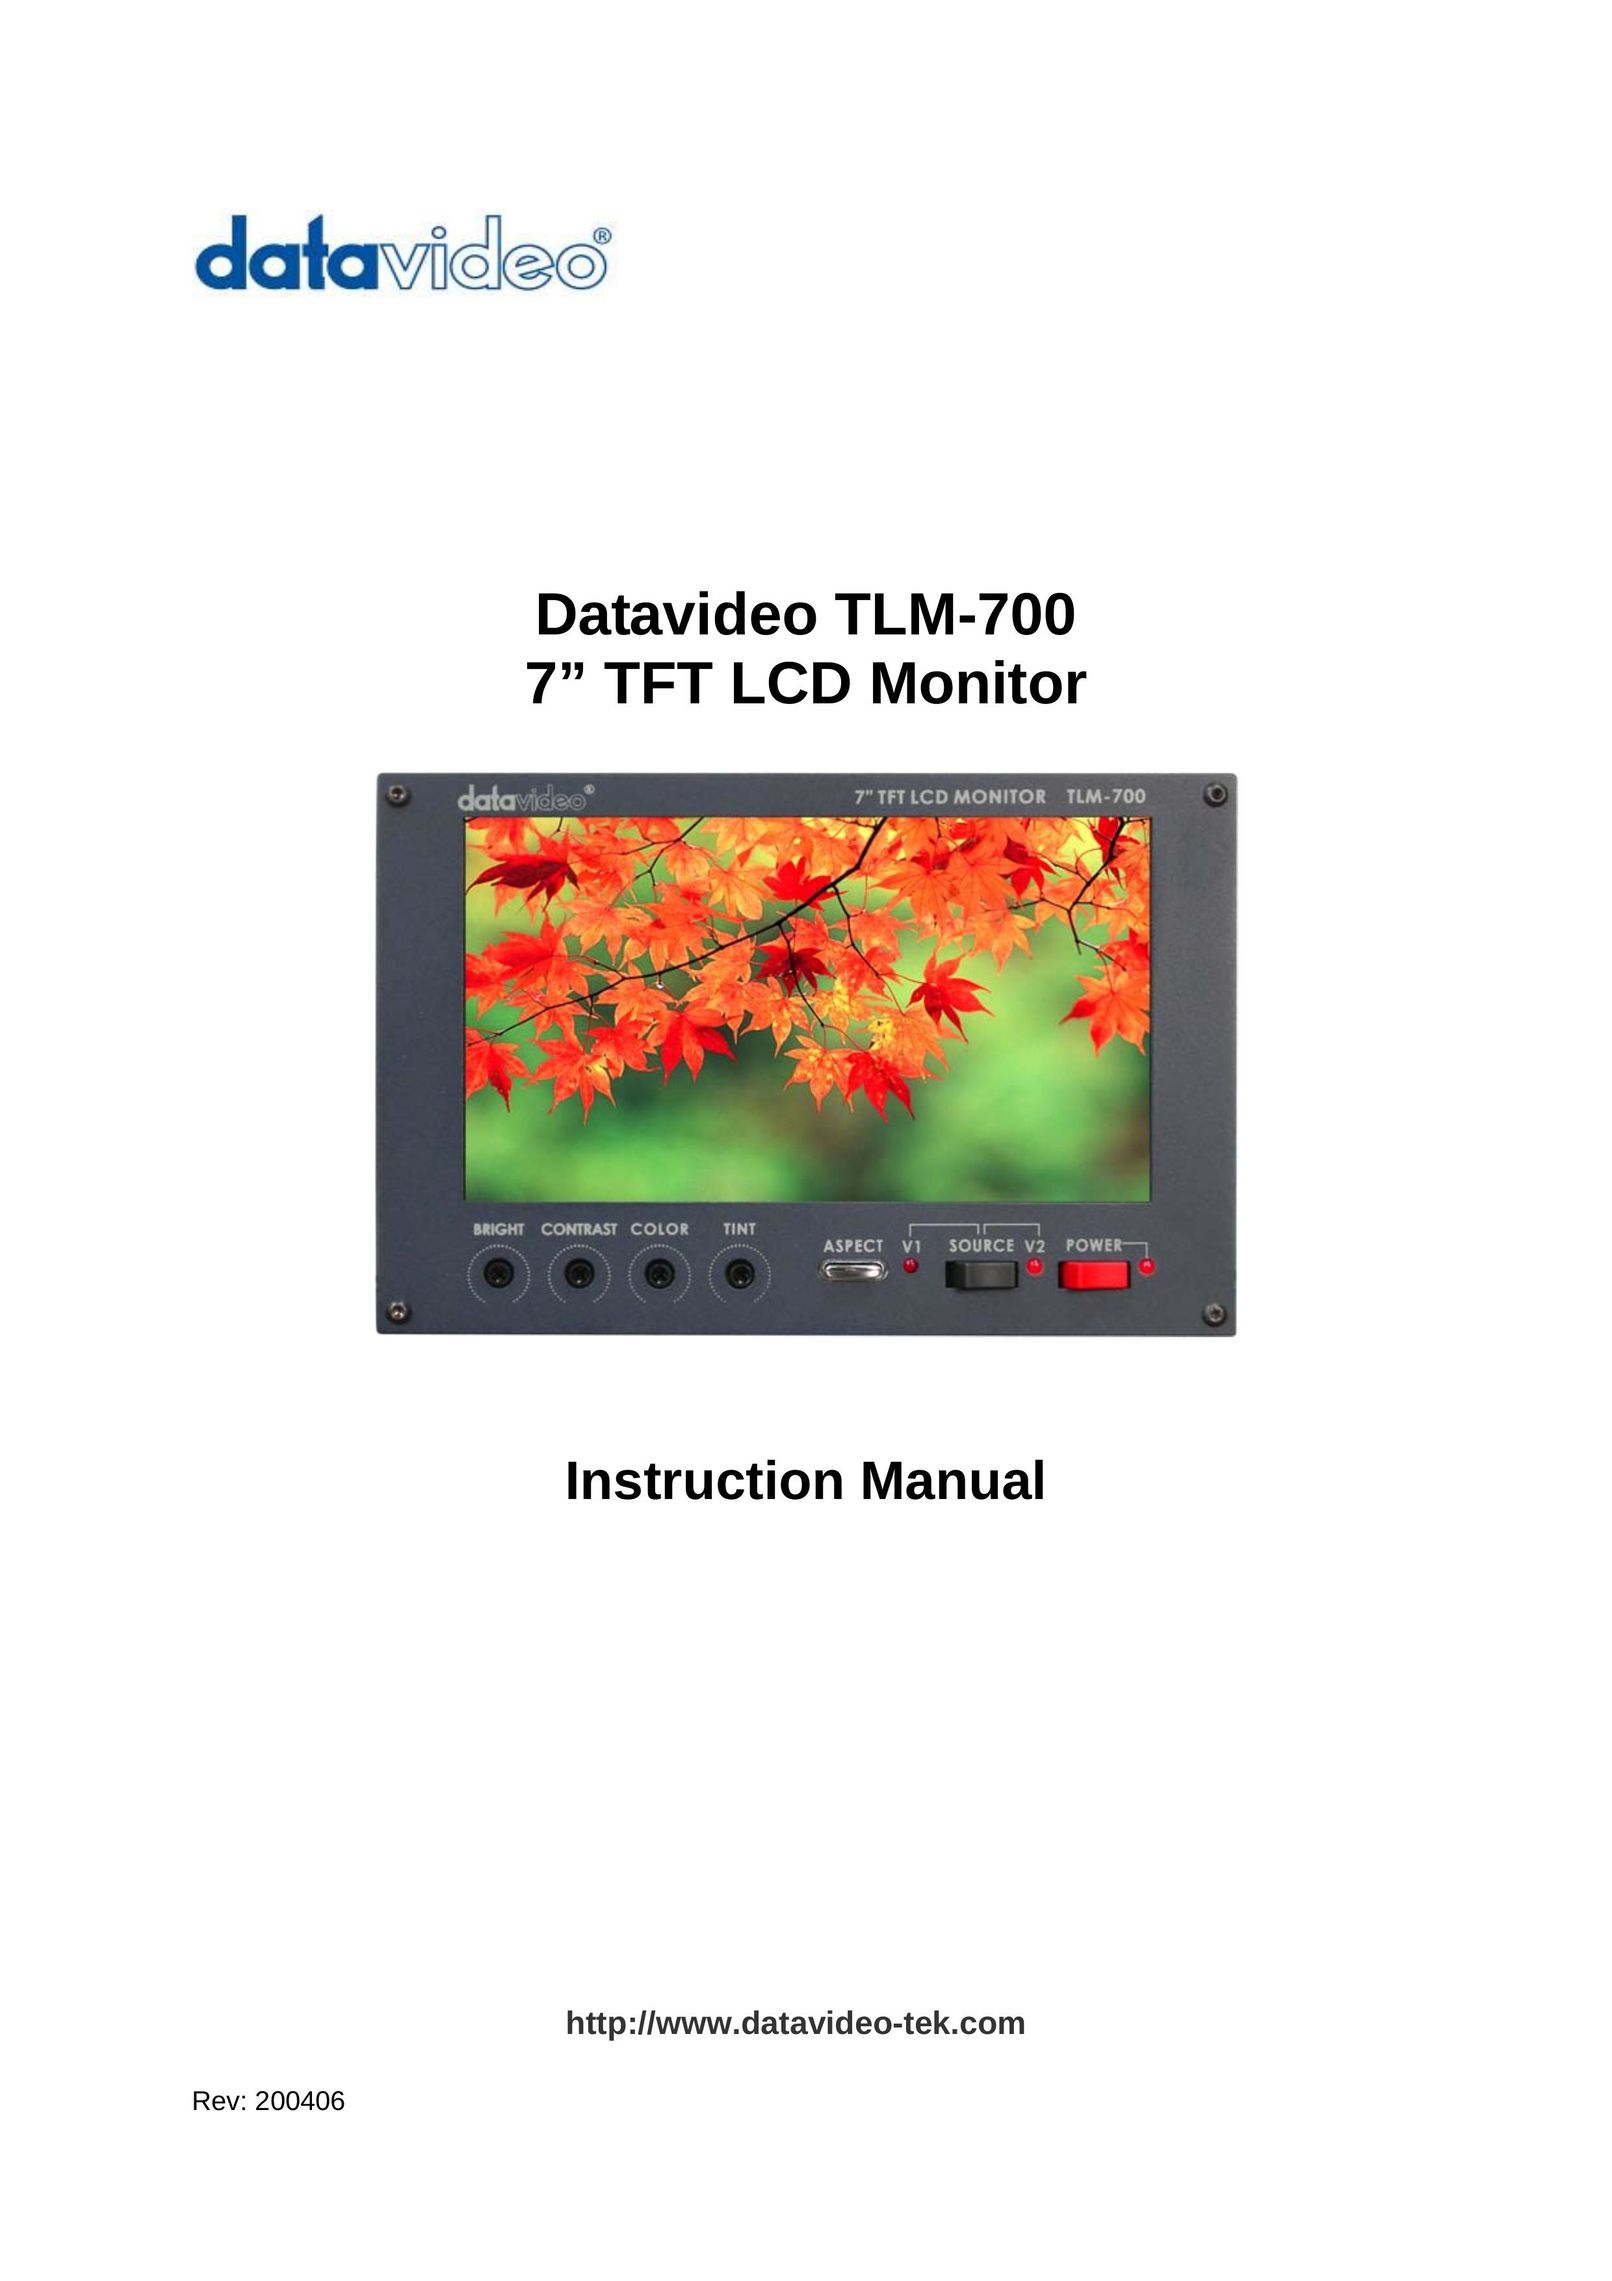 Datavideo TLM-700 Computer Monitor User Manual